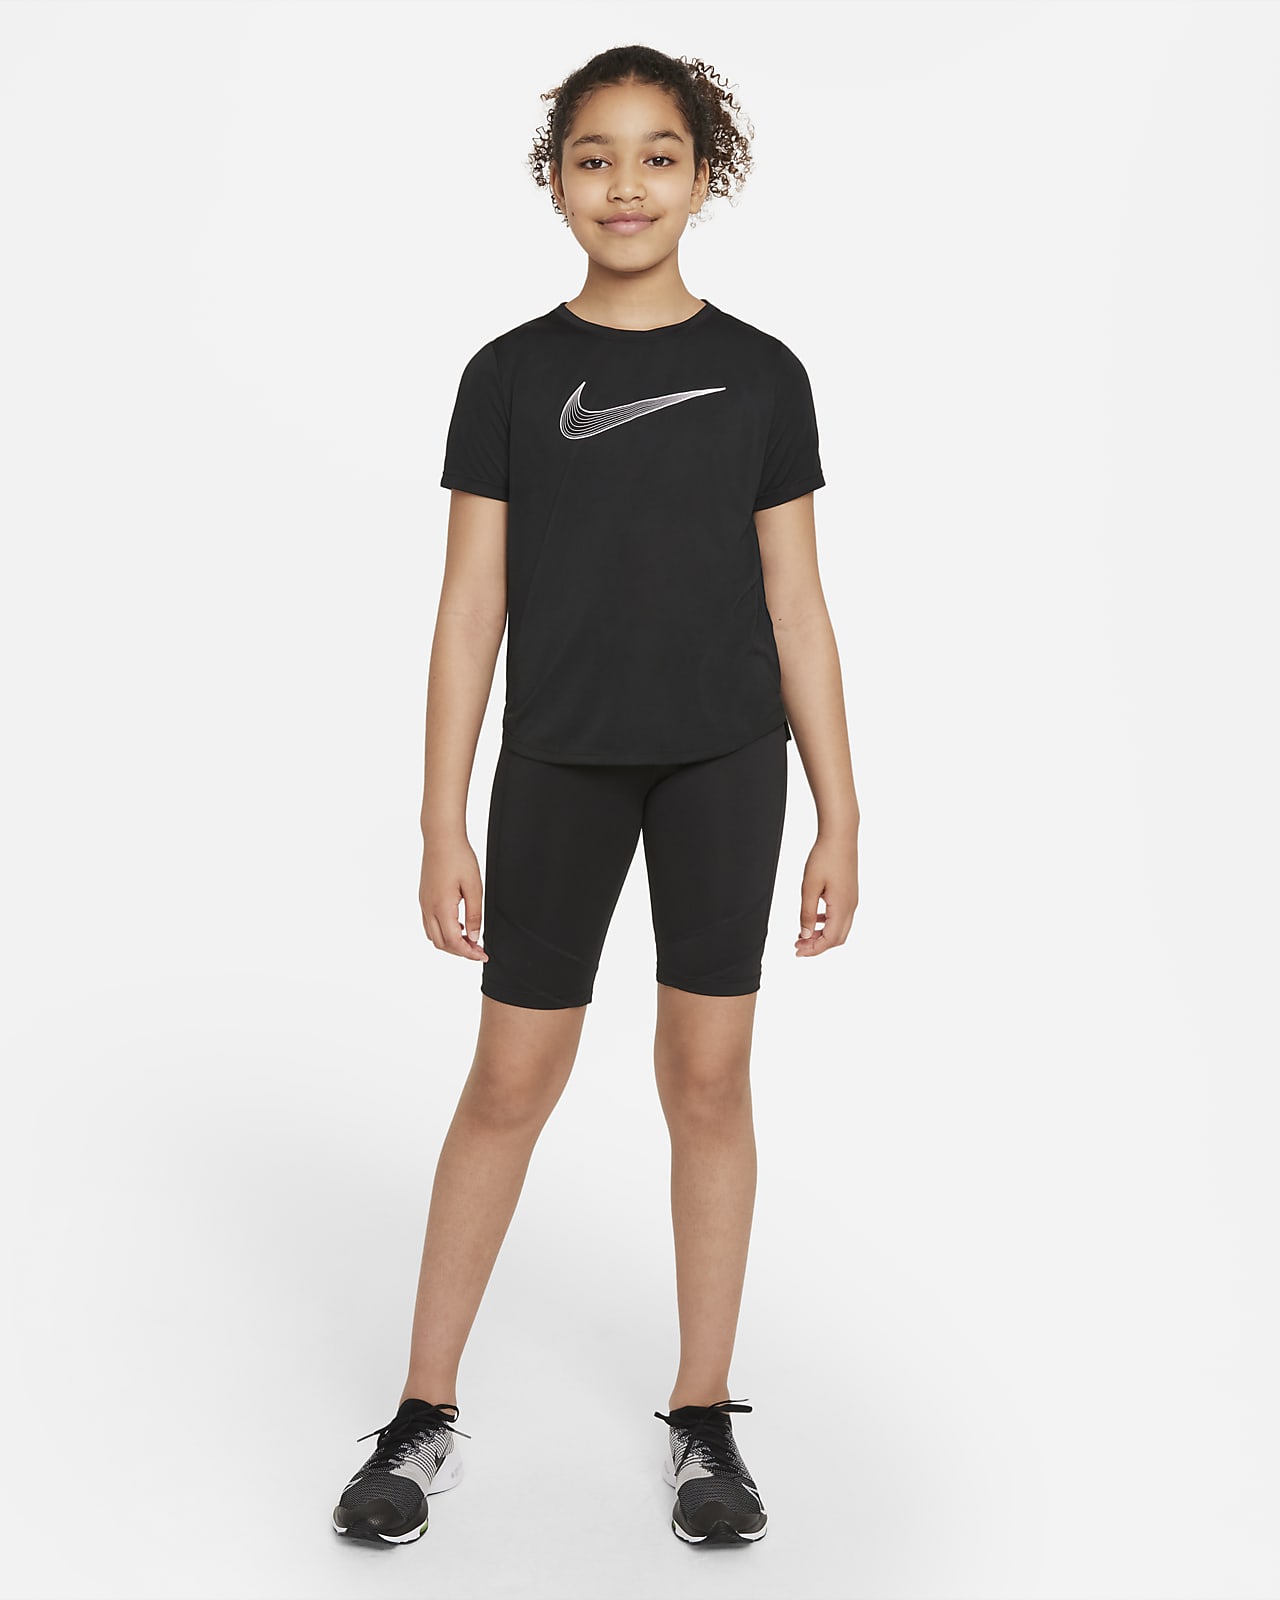 Nike DRI-FIT girl bralette DA1030: for sale at 22.49€ on